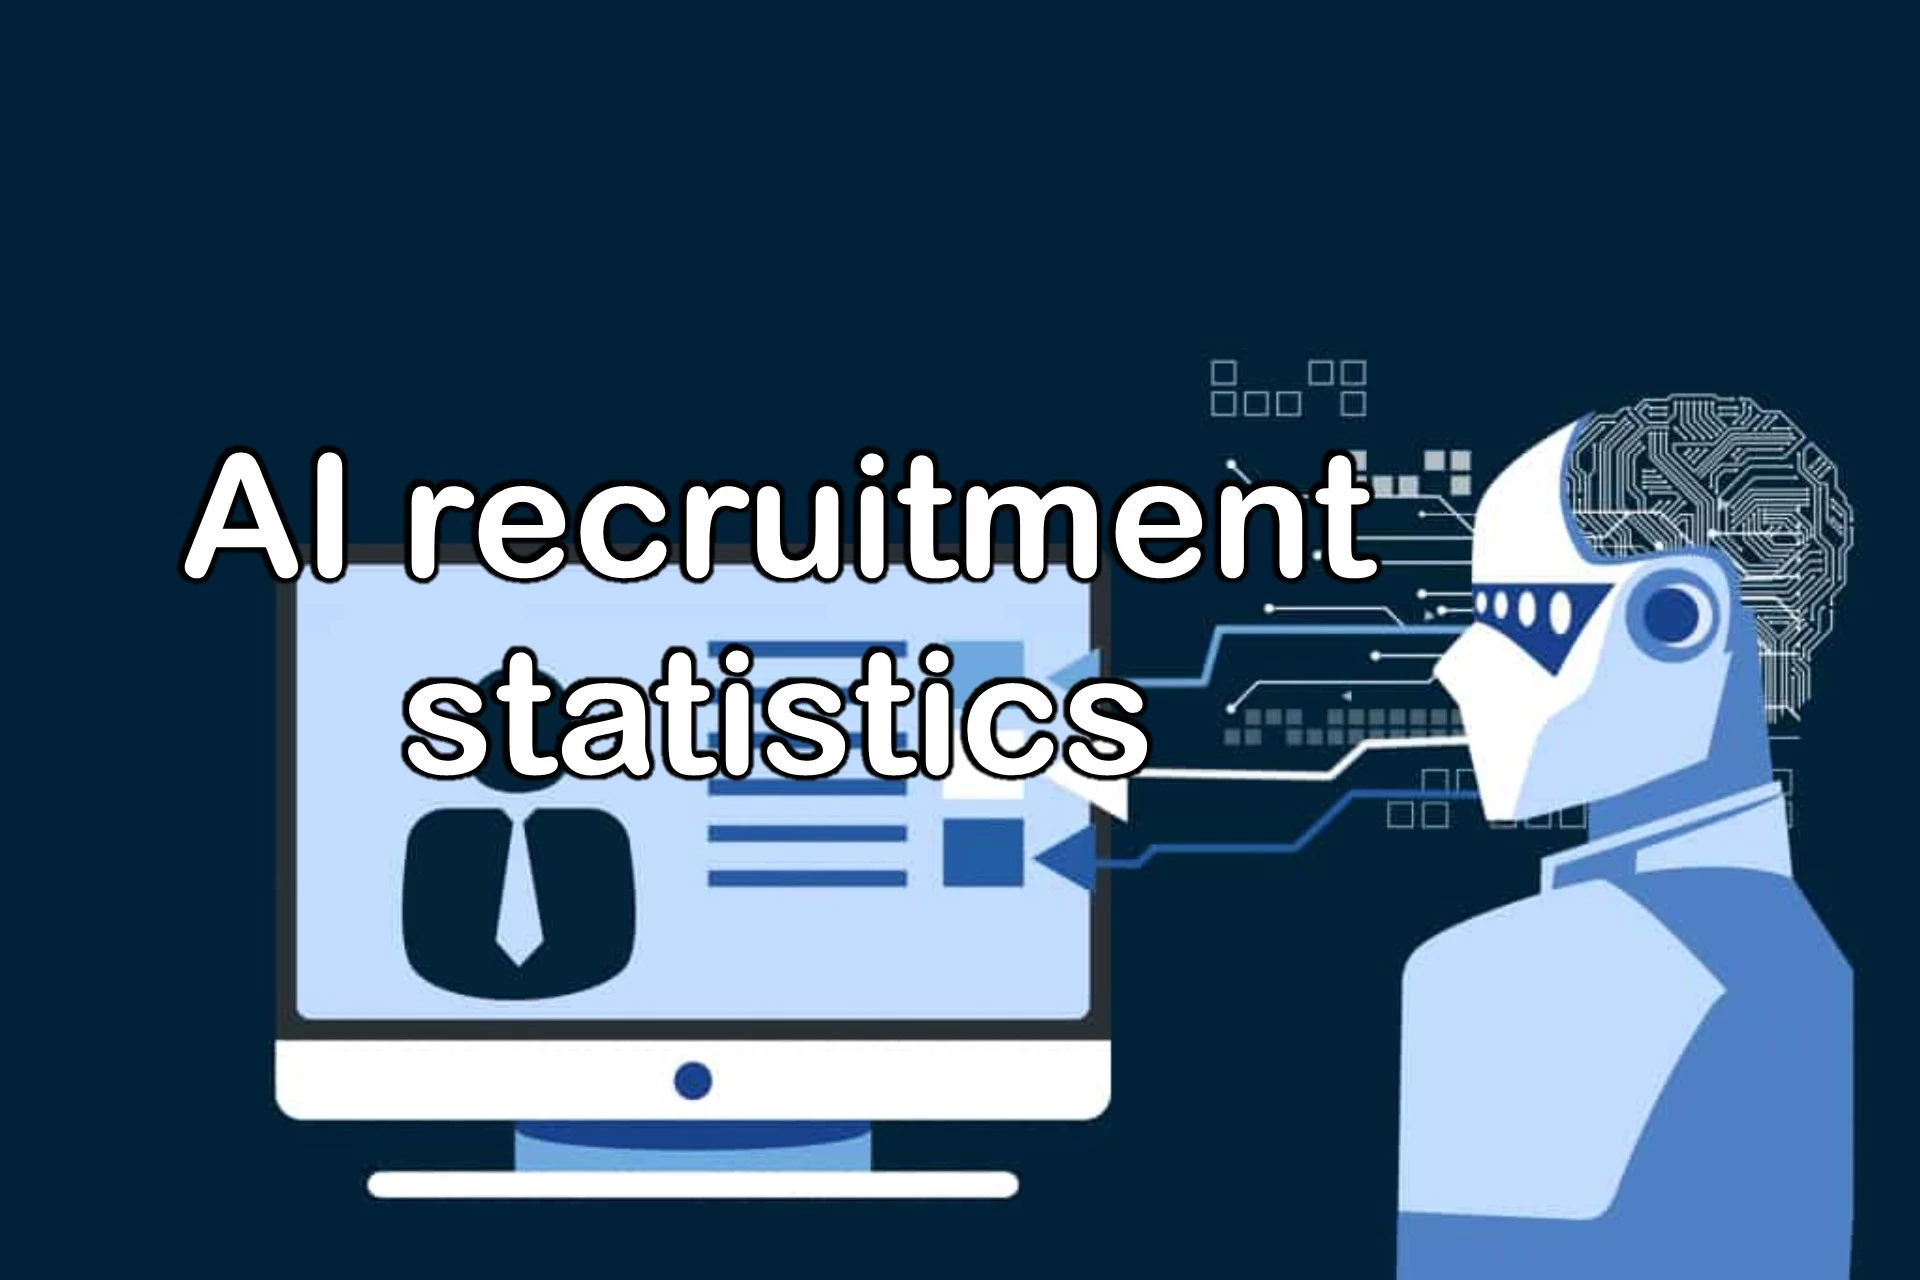 AI recruitment statistics